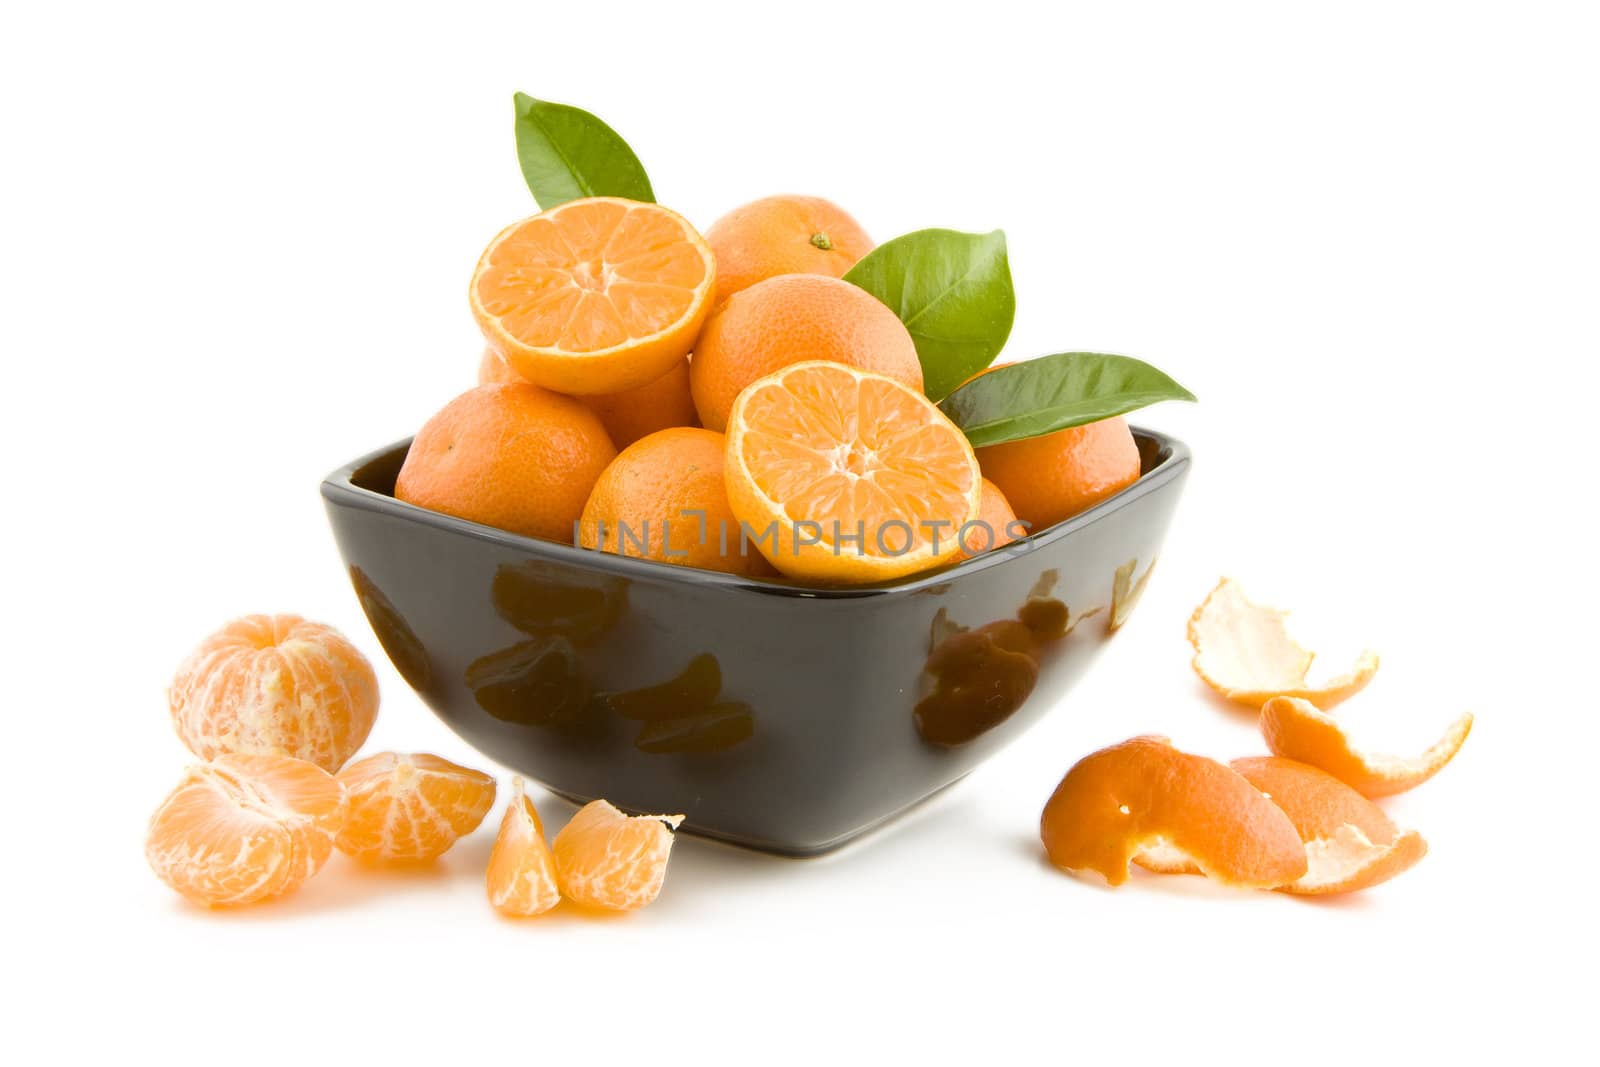 Fresh tangerines by Gbuglok